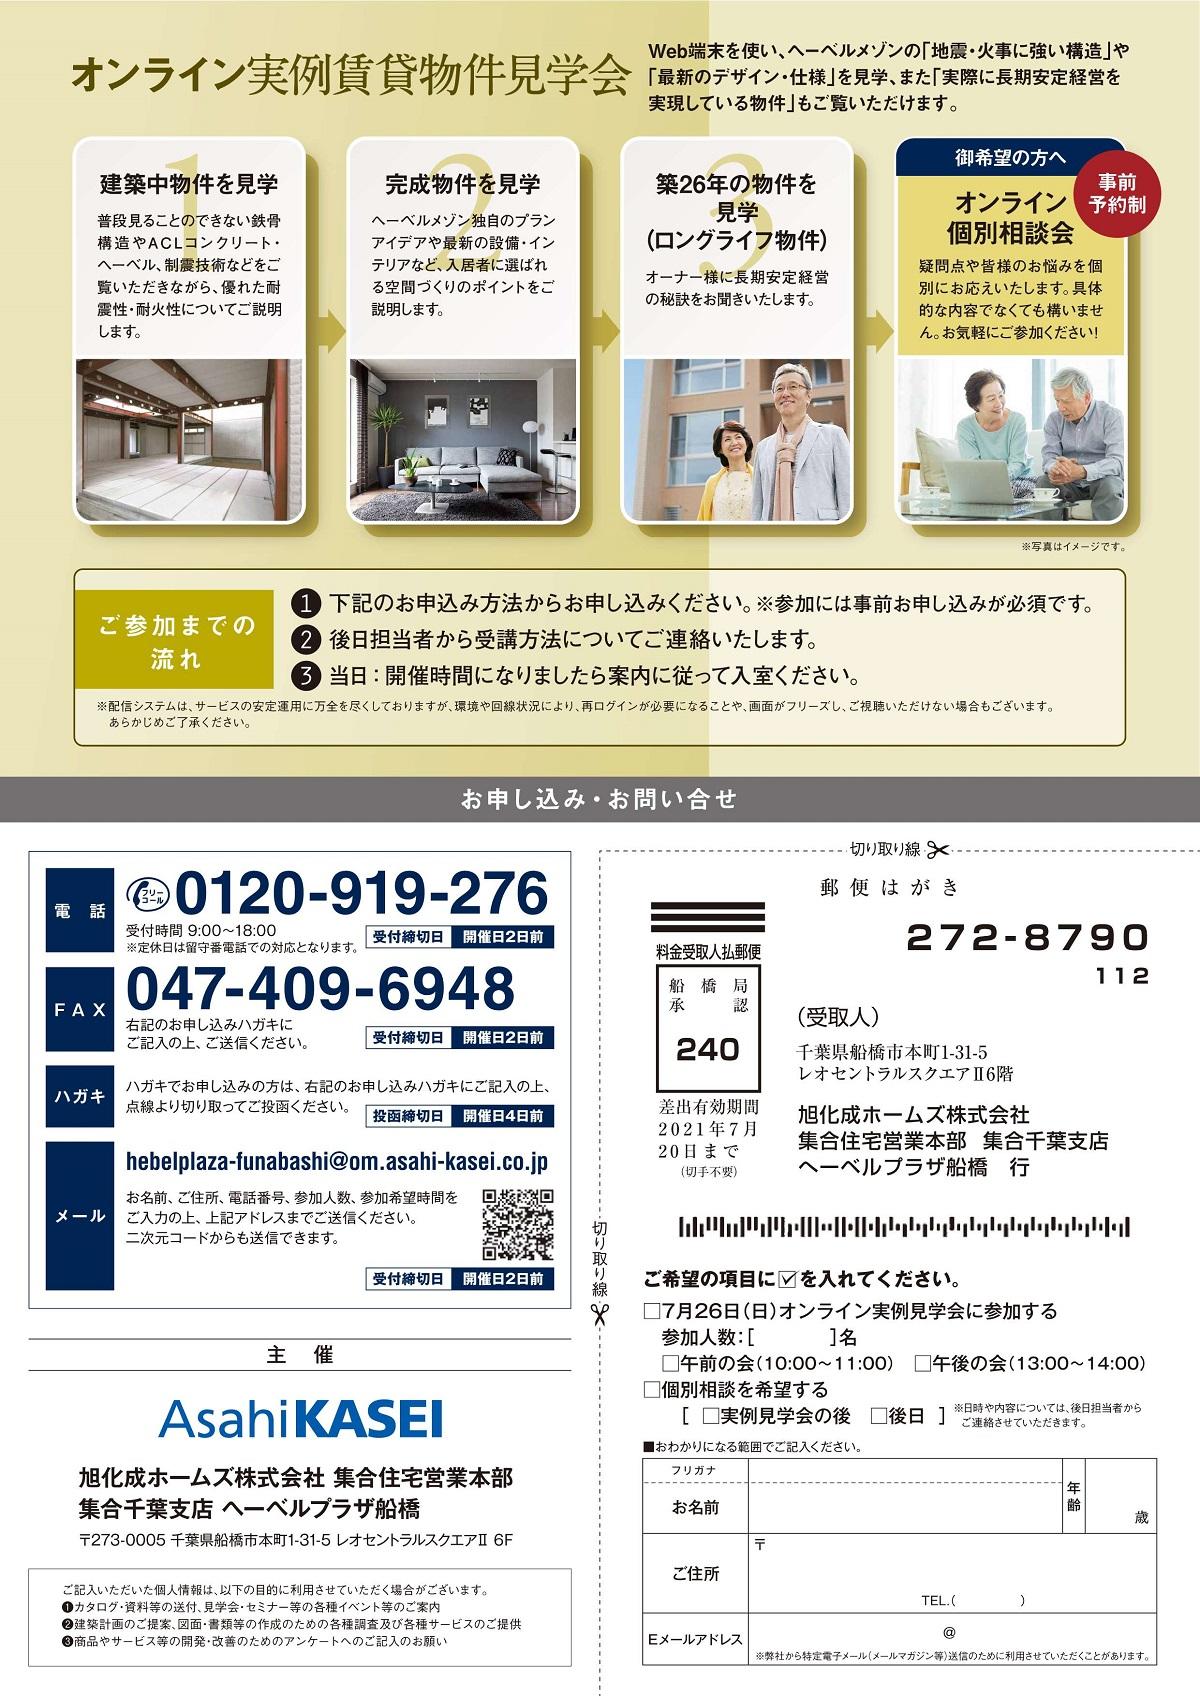 https://www.asahi-kasei.co.jp/maison/hebelplaza/blog/18/funabashi/item/2020/200713_2.jpg